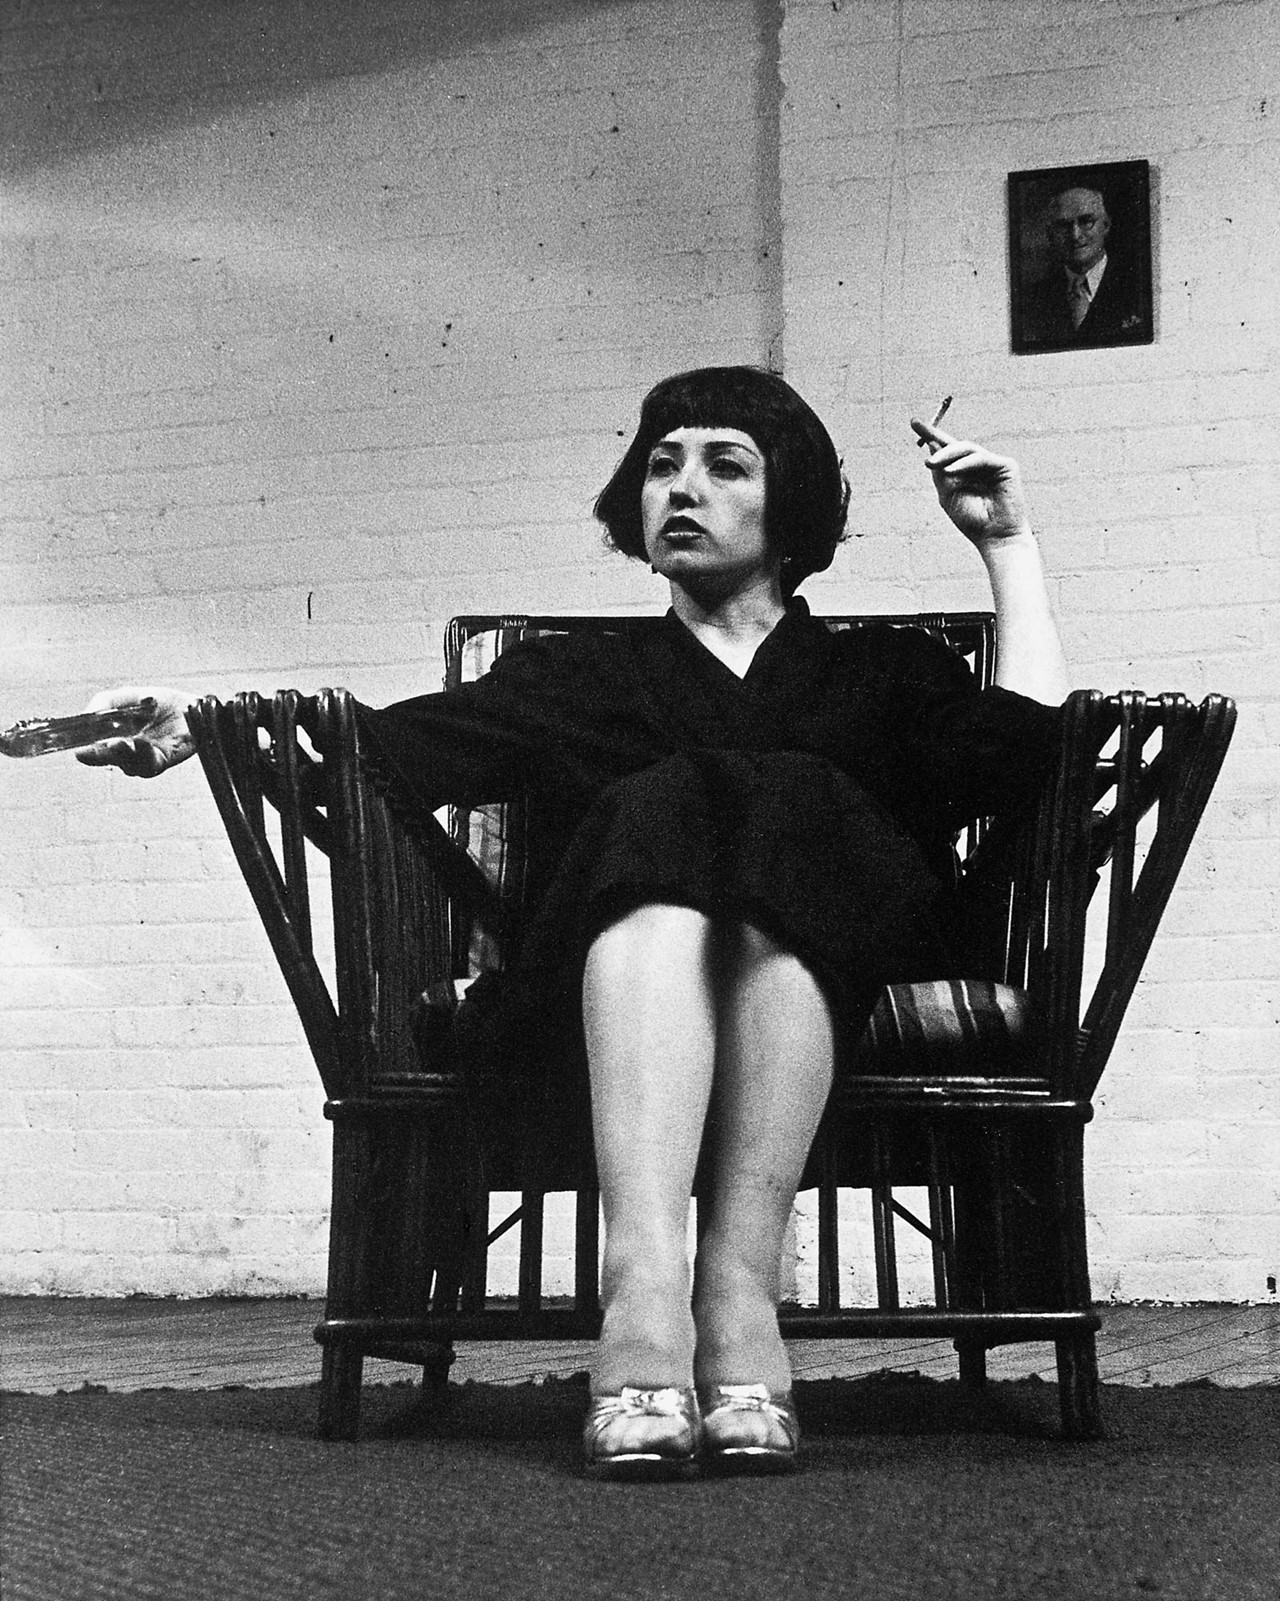 Responses: Cindy Sherman's Untitled Film Stills (1977) – Celluloid